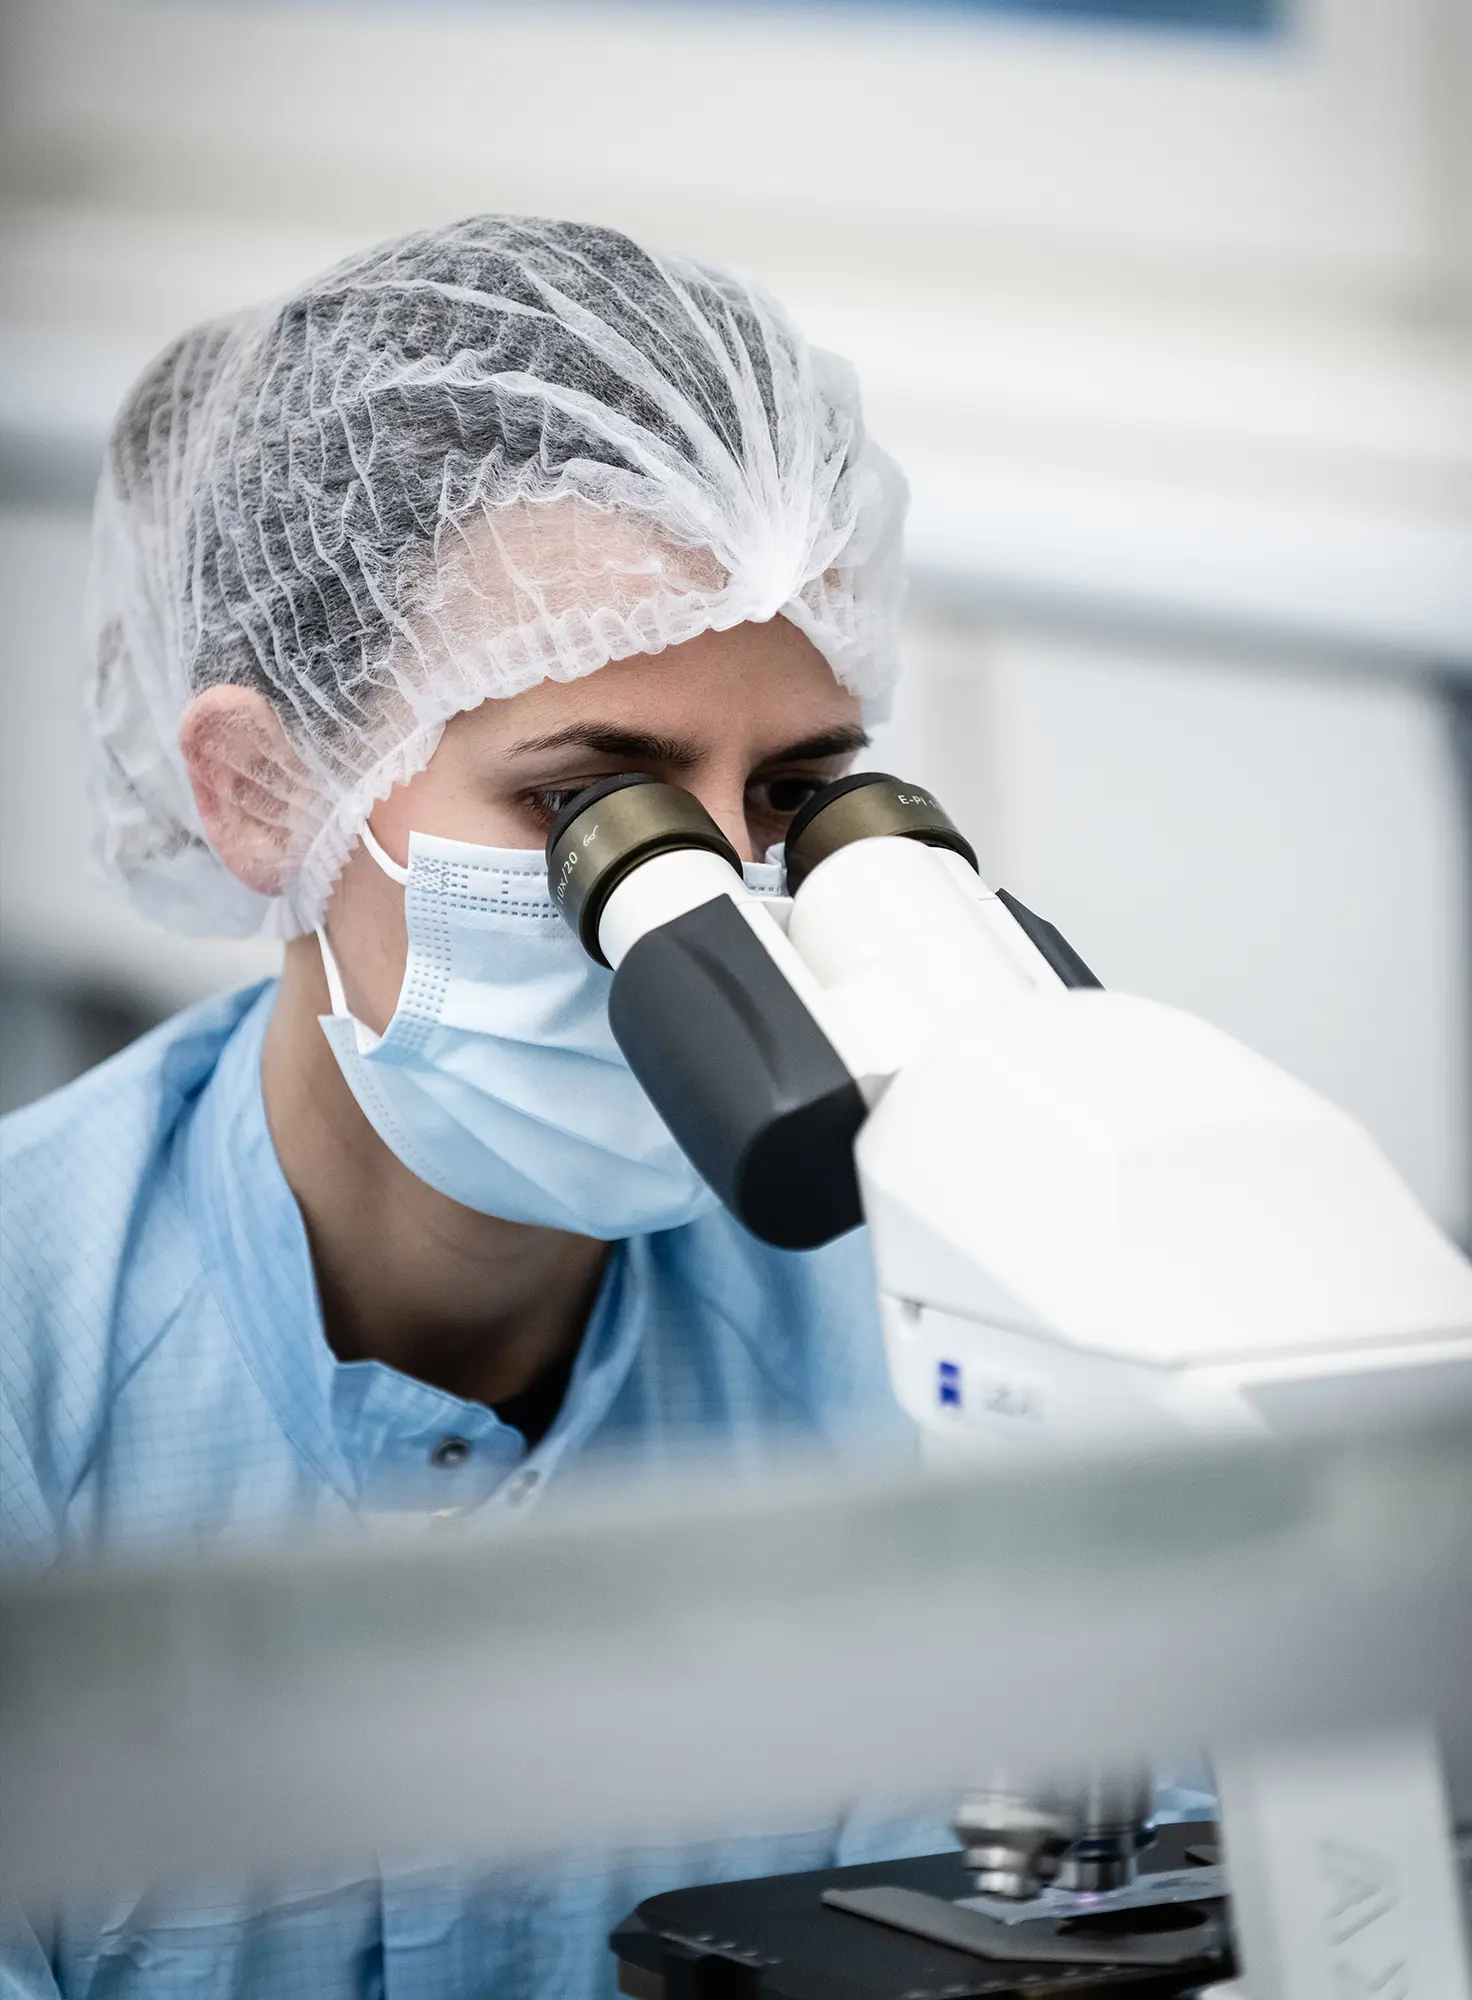 Lab technician looks through a microscope